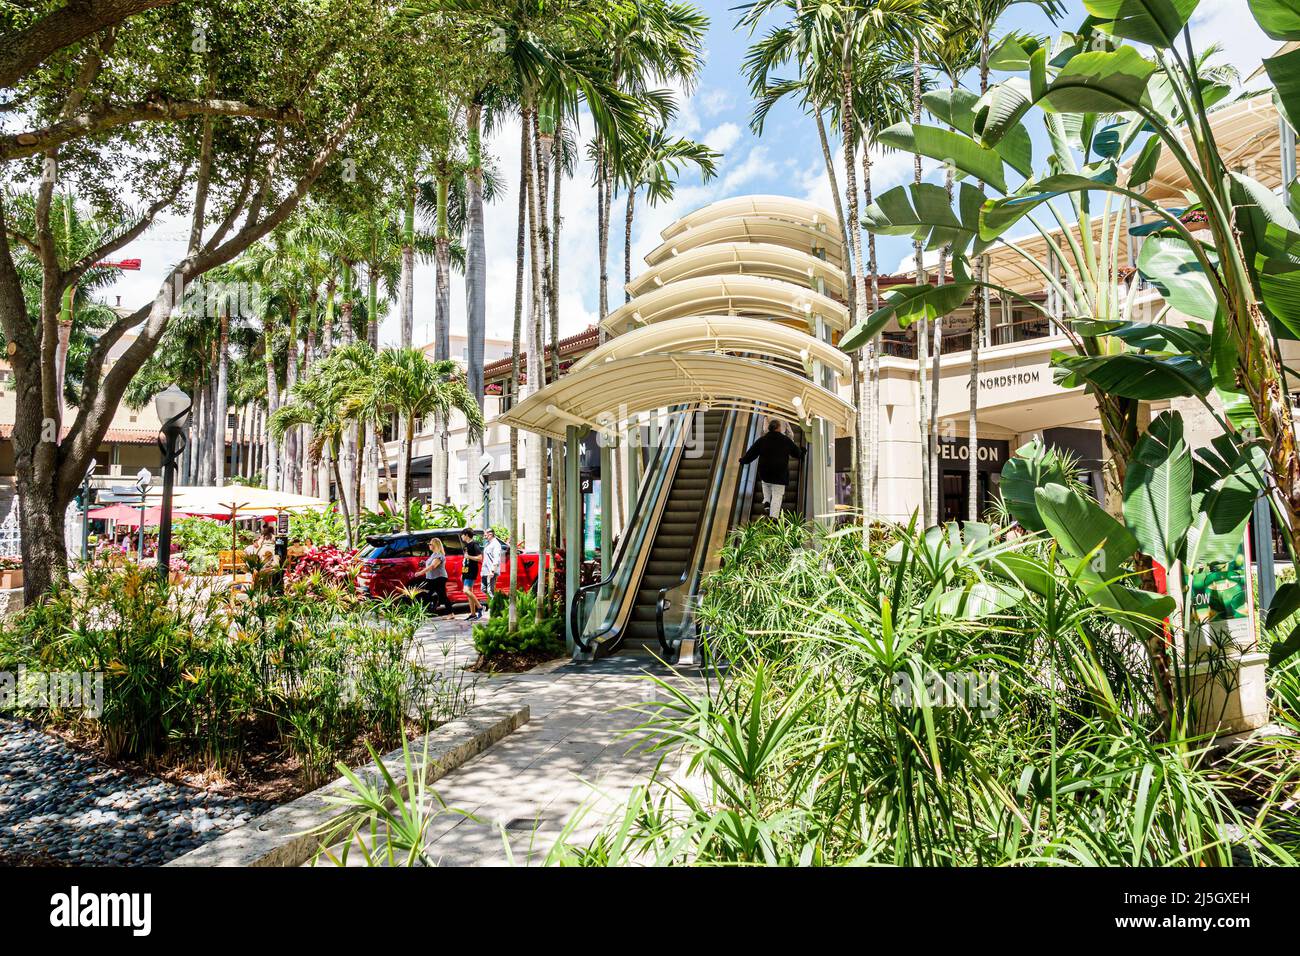 Miami Florida Coral Gables Shops en el exclusivo centro comercial al aire libre Merrick Park Foto de stock